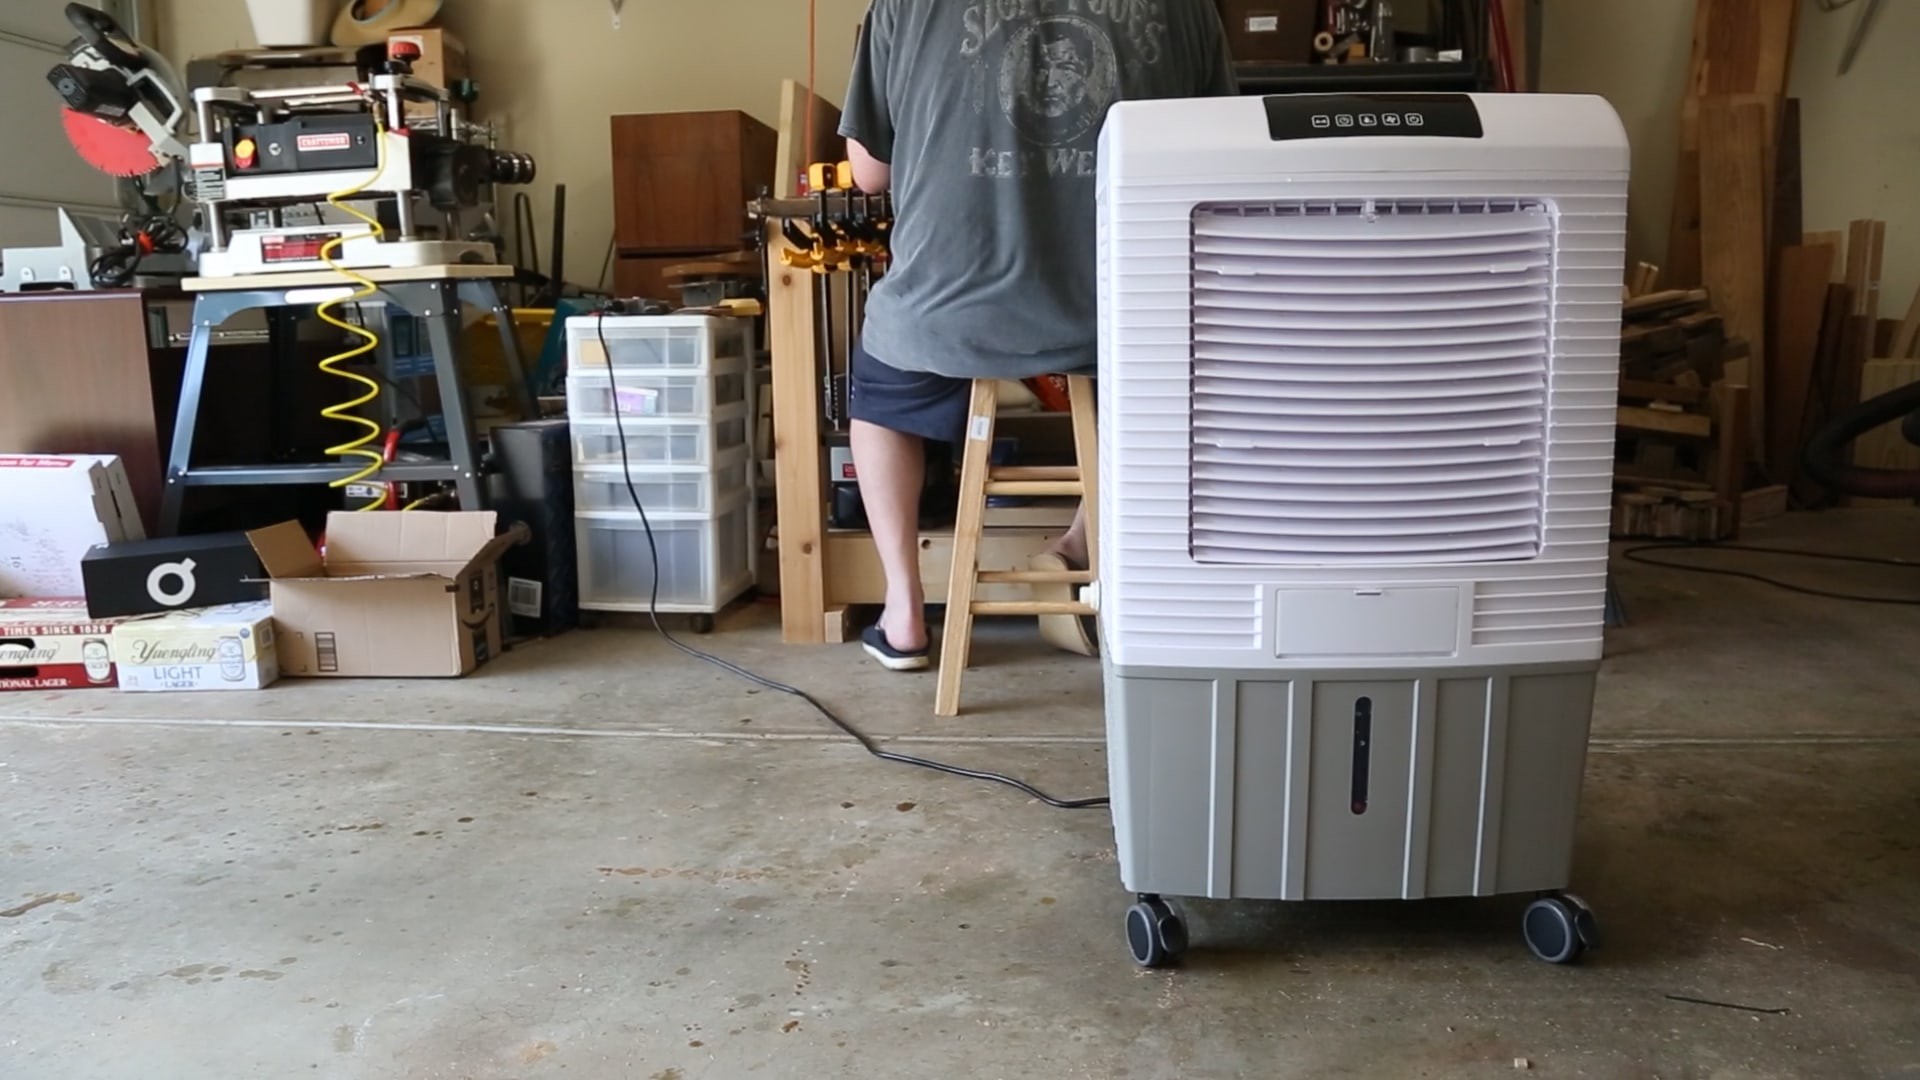 box fan evaporative cooler